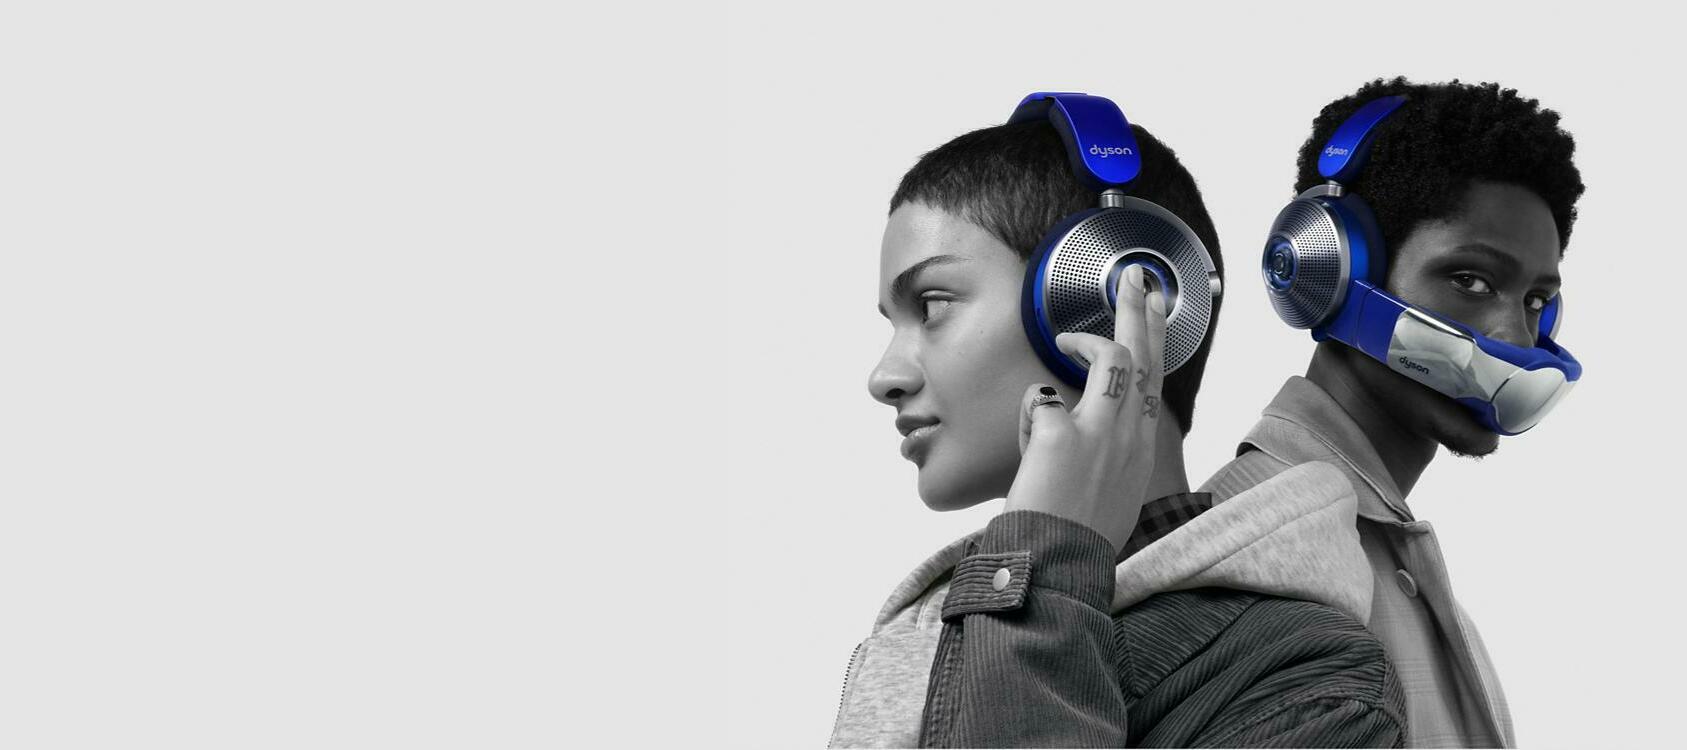 Dyson Zone™ headphones - Dyson's entry into audio